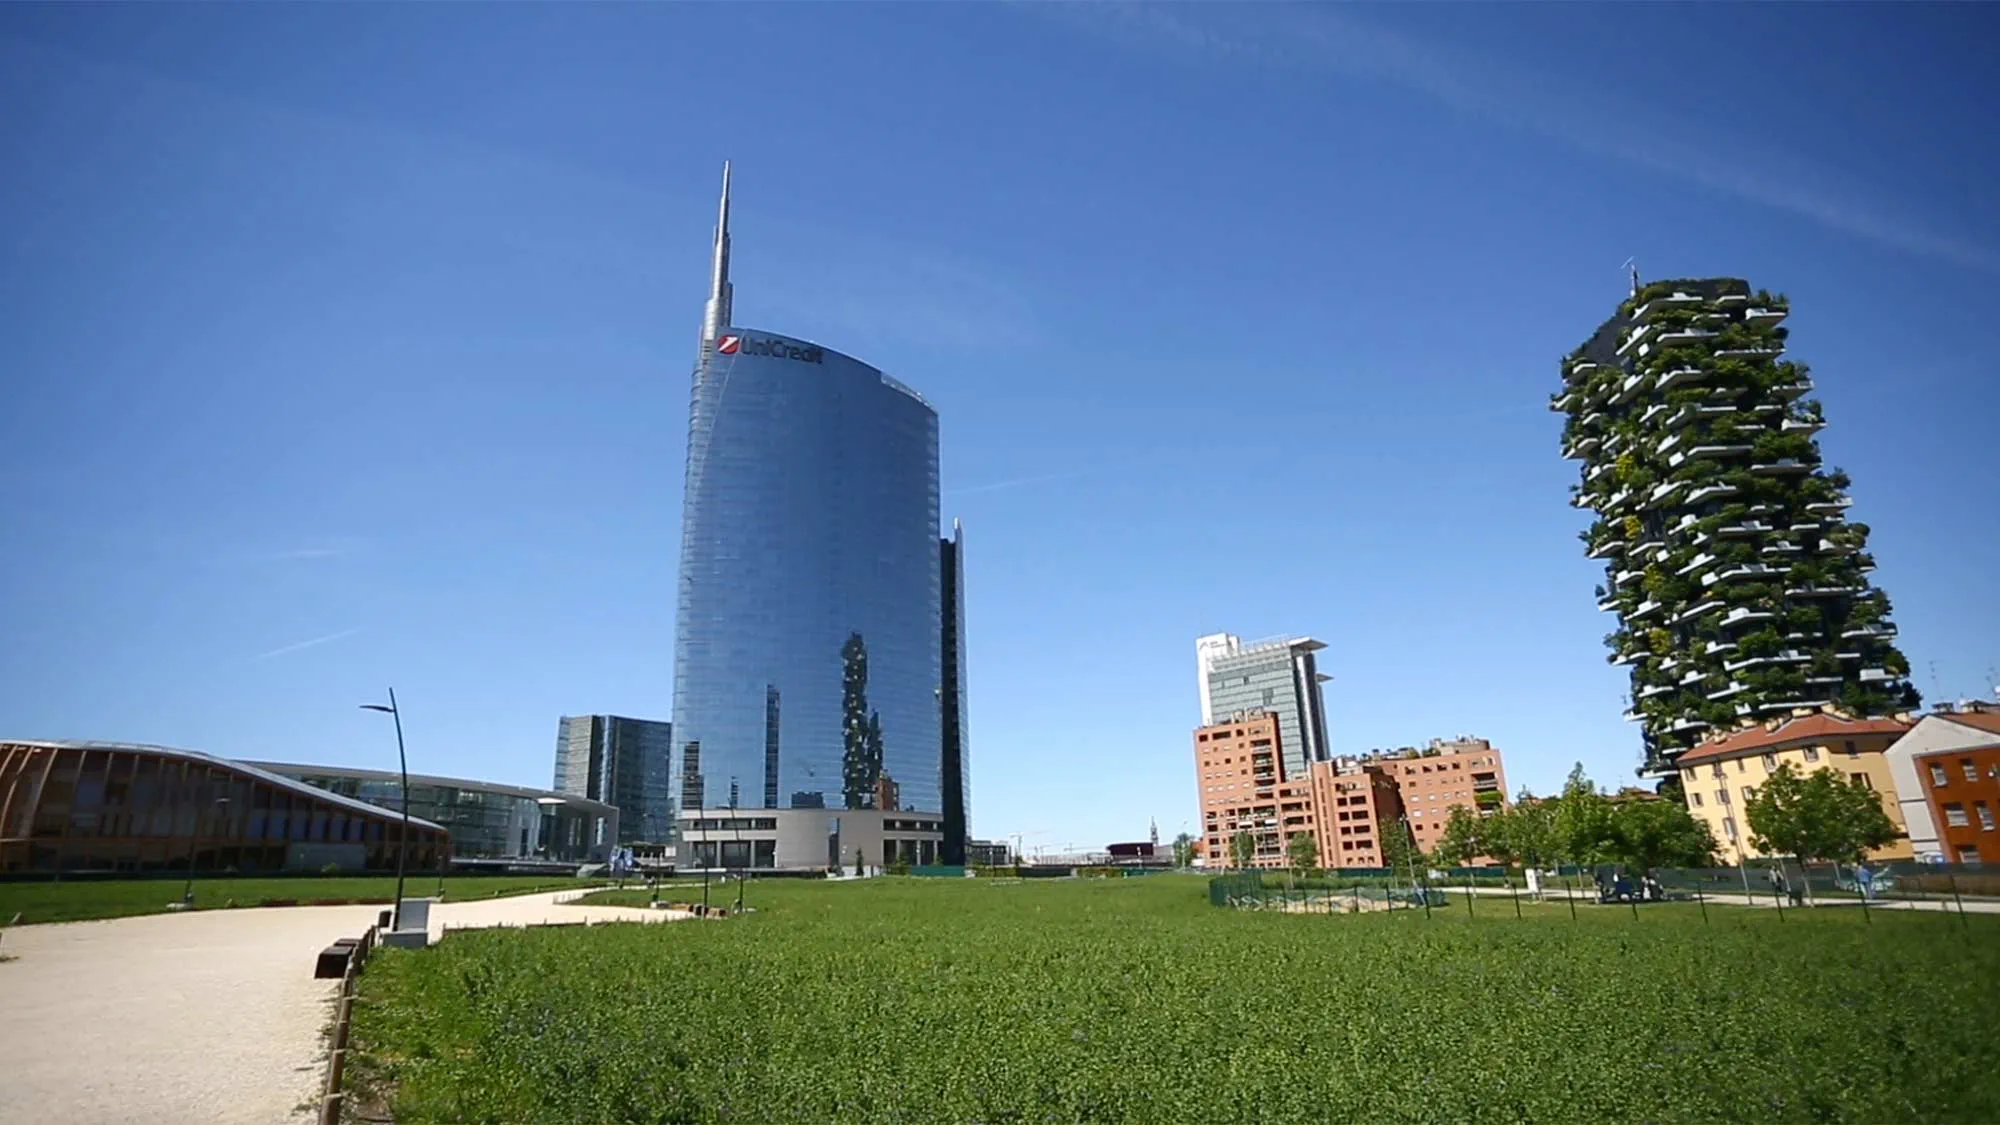 Bosco Verticale situated within the Porto Nuevo development, Milan 